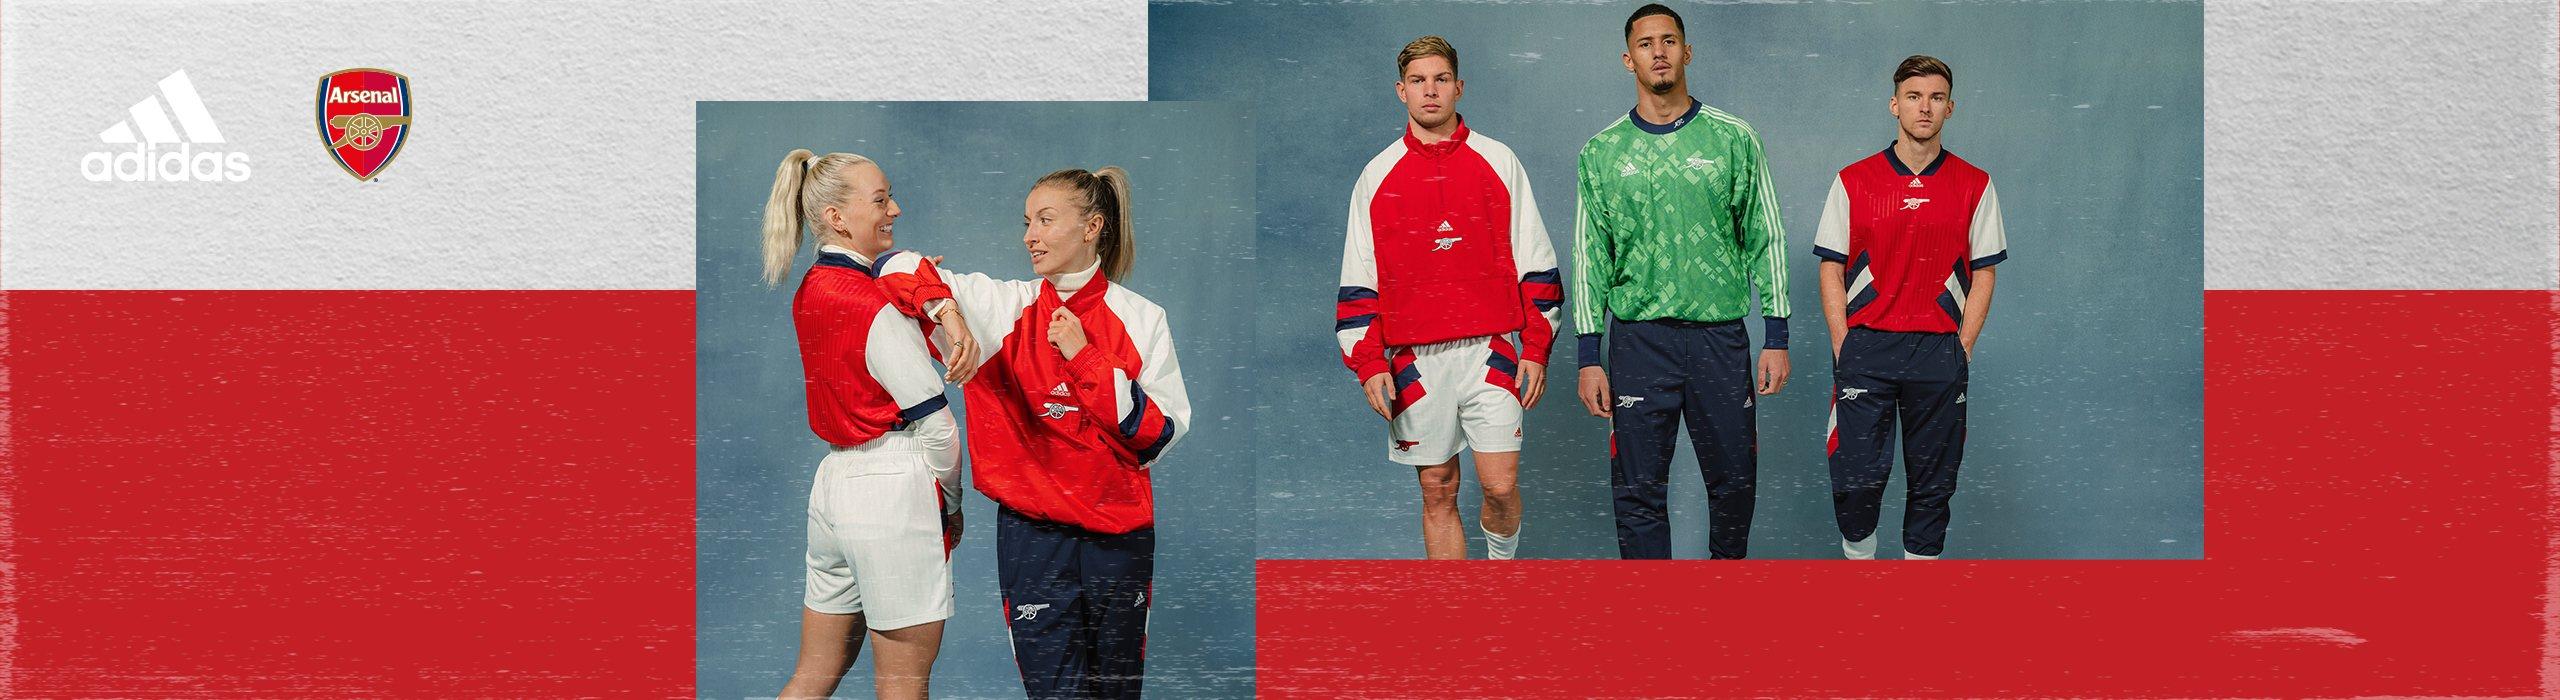 The Arsenal x adidas Originals range is here!, adidas x Arsenal, News